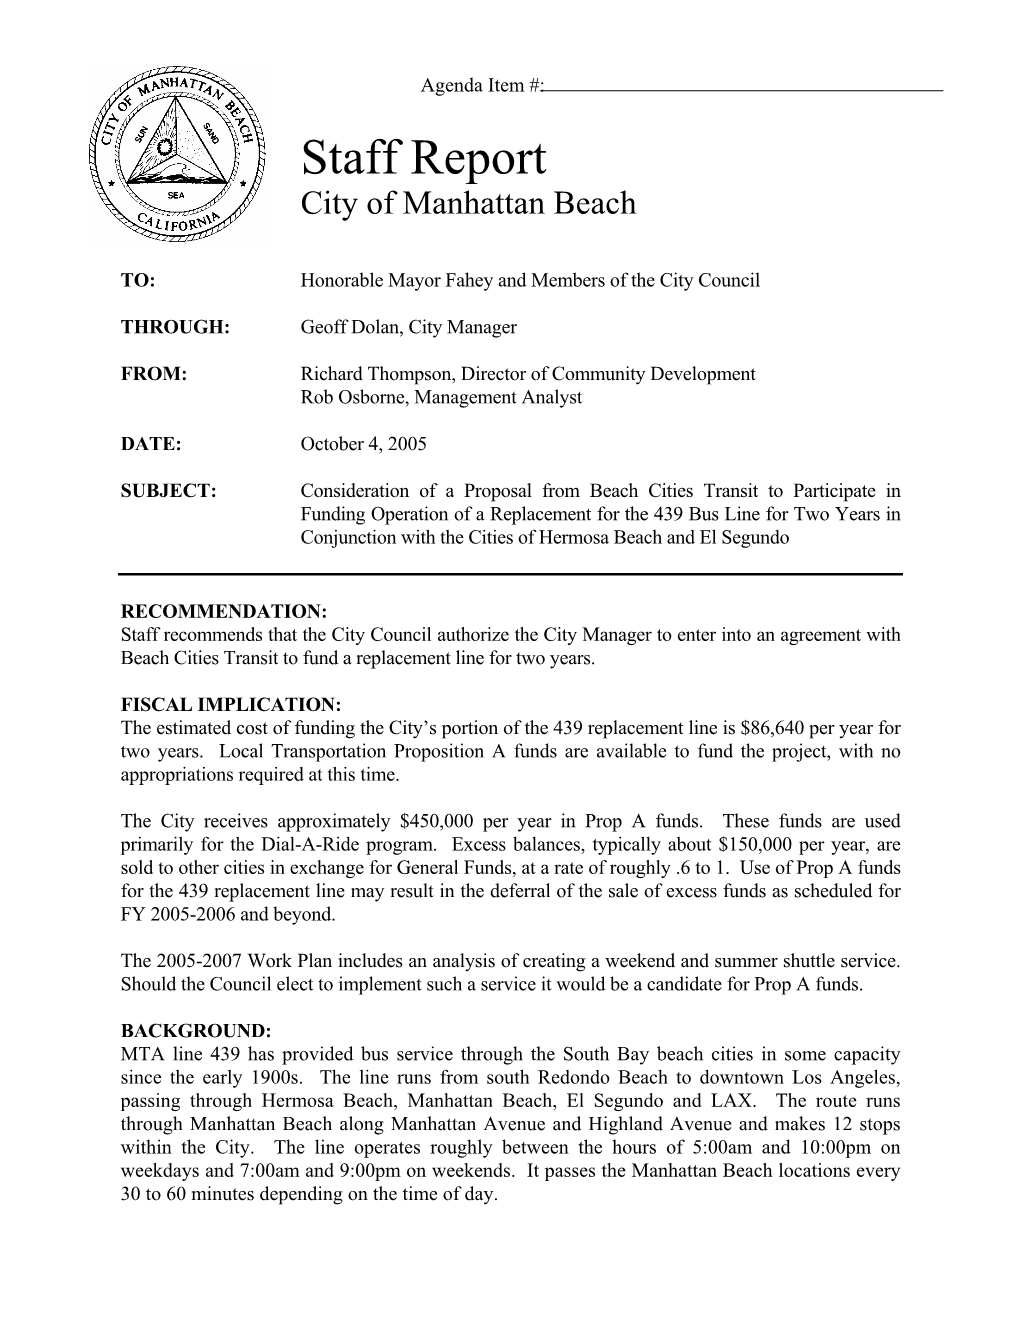 Staff Report City of Manhattan Beach